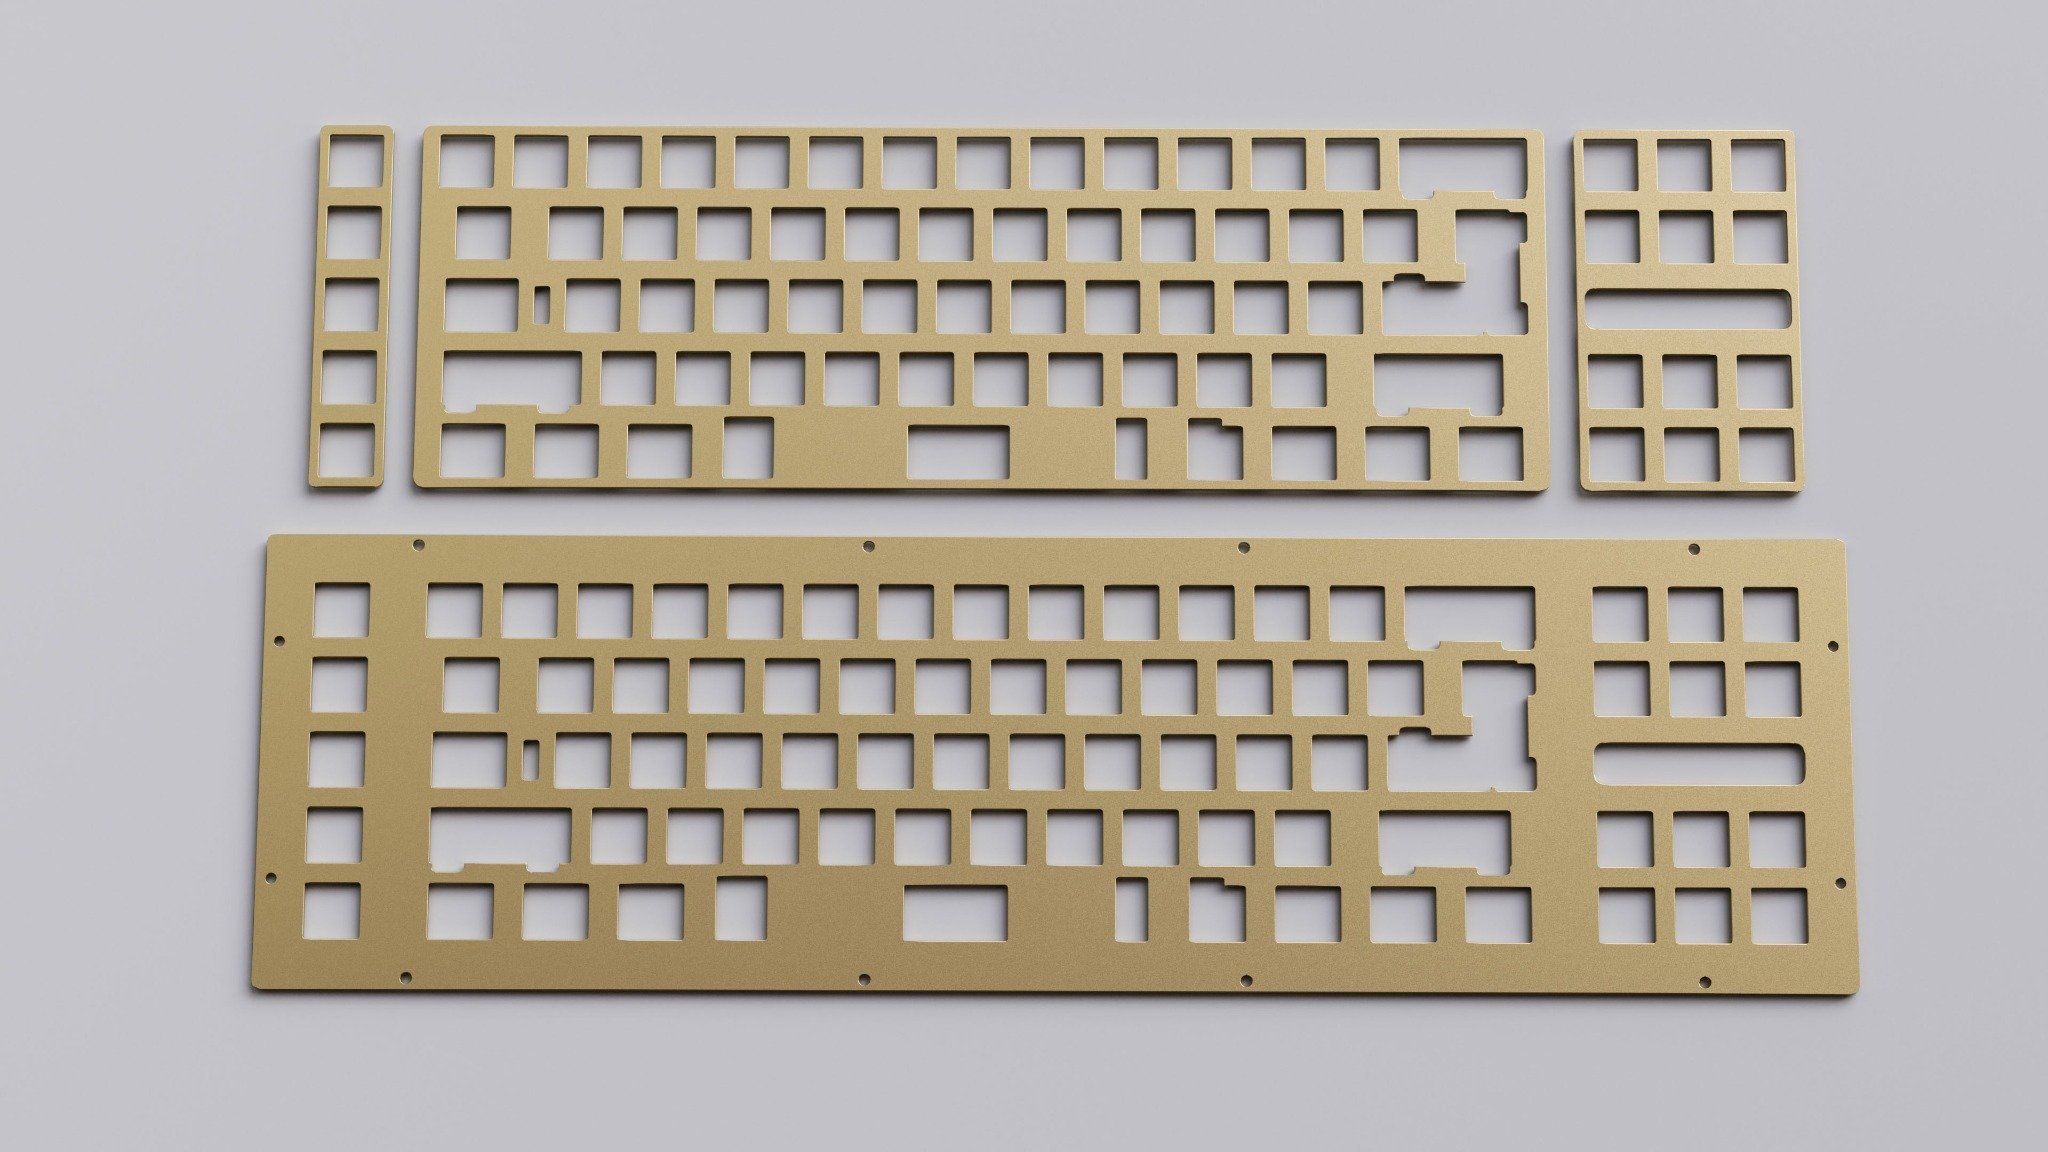  [Extra] DR 70F Keyboard Kit 